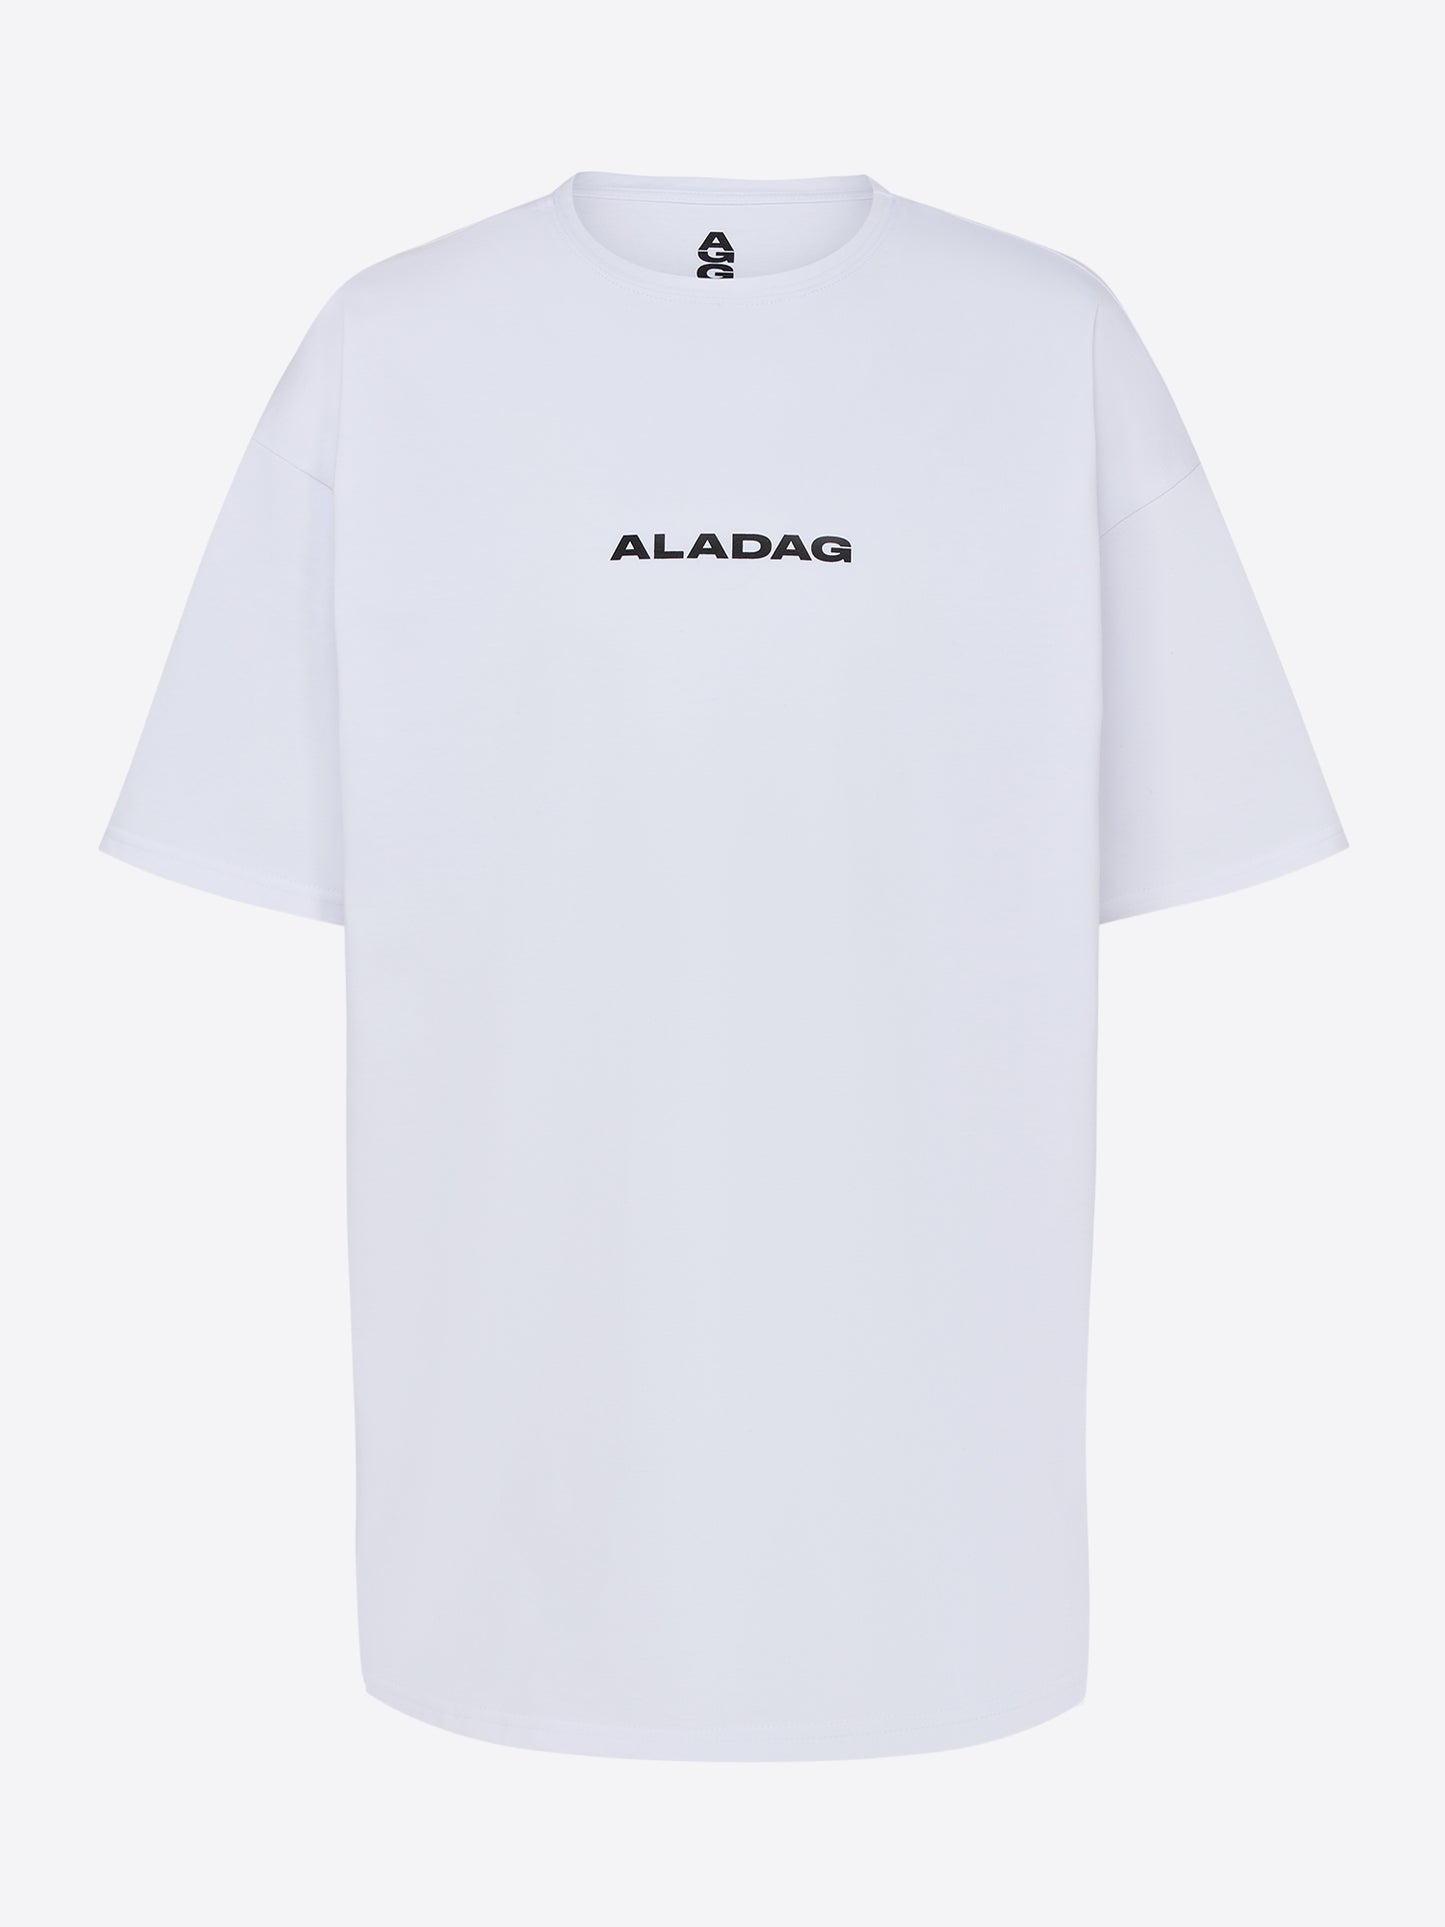 Limited ALADAG - MY RELIGION - Shirt White